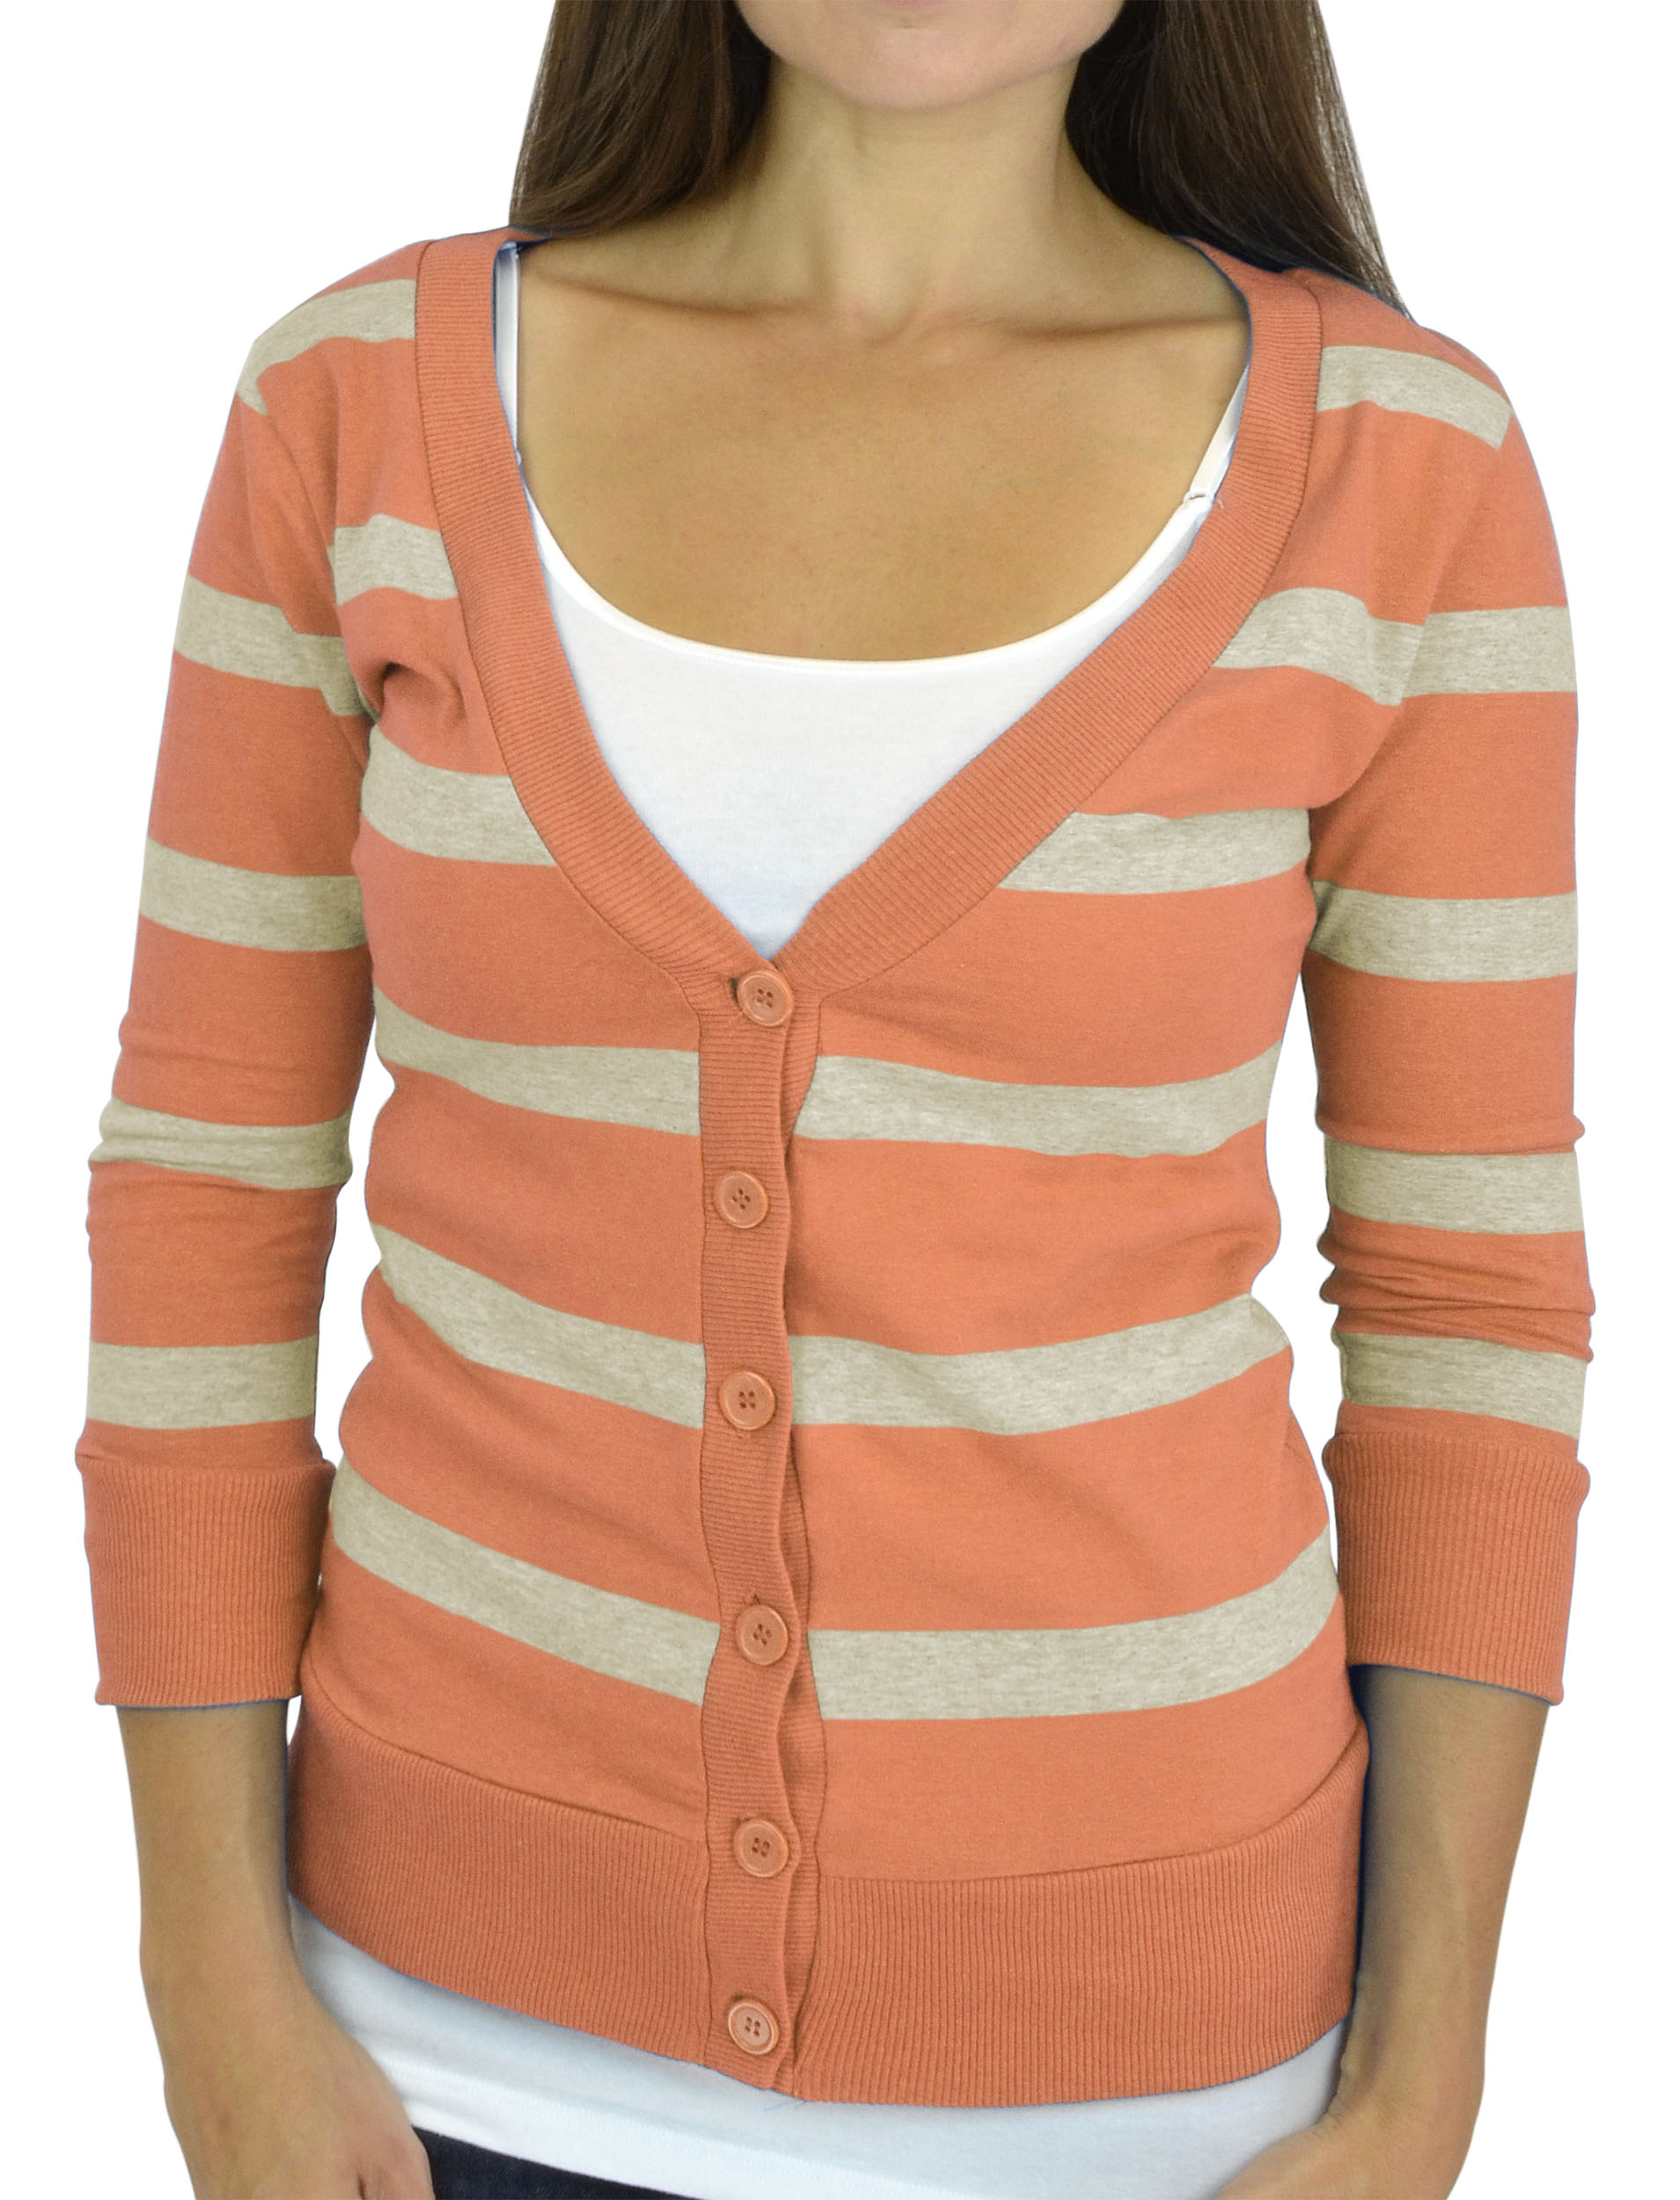 Belle Donne - Women / Girl Junior Size Soft 3/4 Sleeve V-Neck Sweater Cardigans - Peach/Small